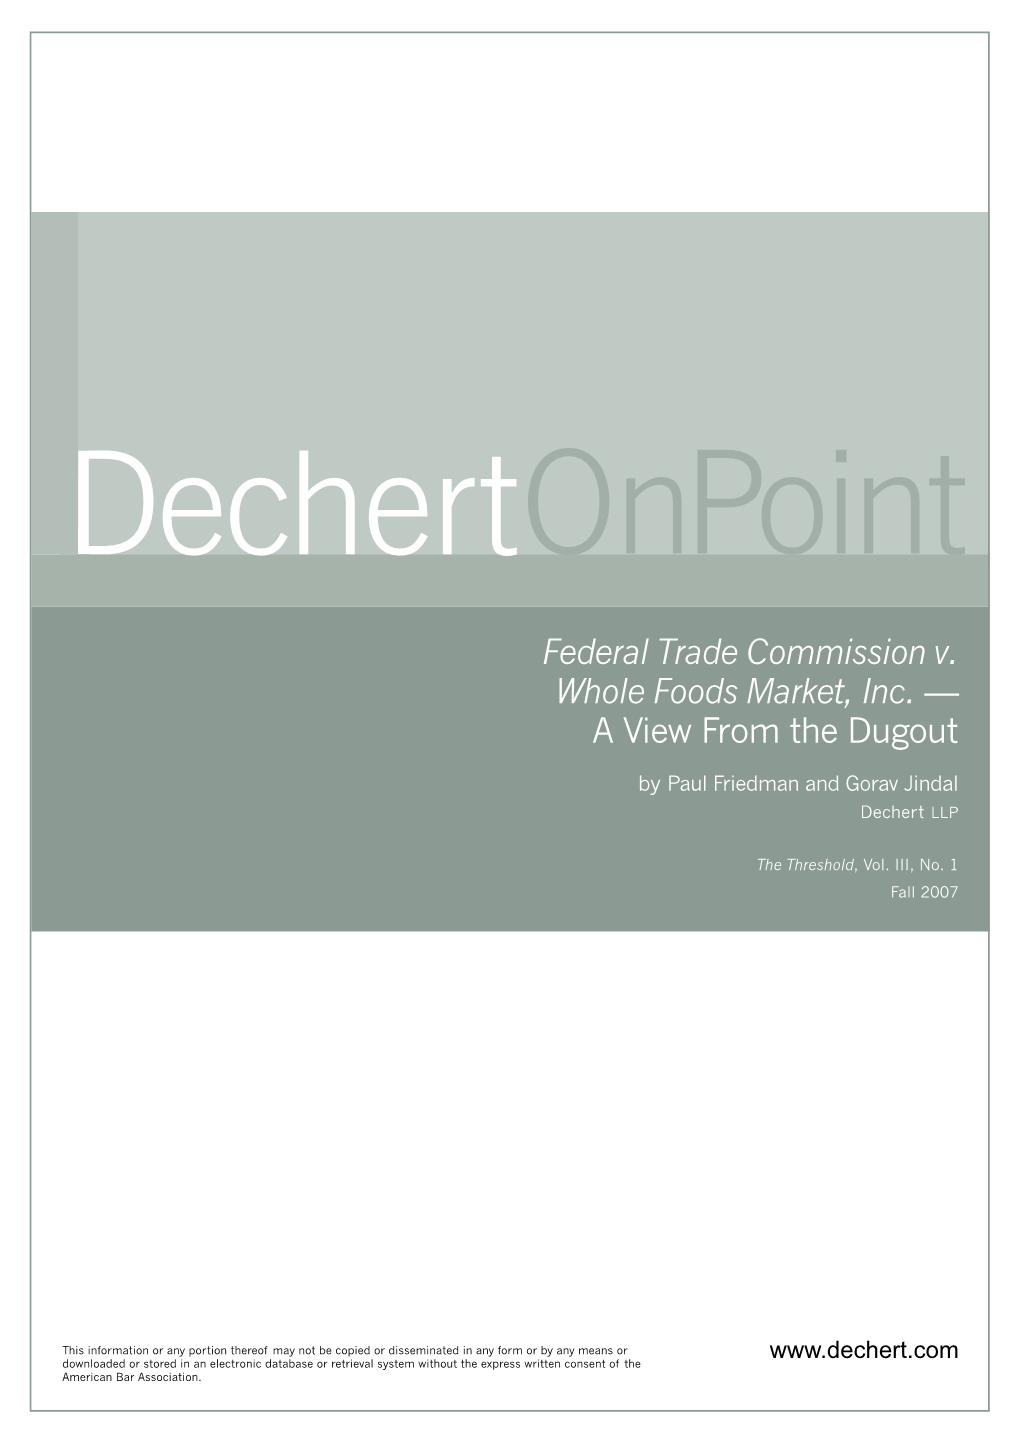 Federal Trade Commission V. Whole Foods Market, Inc. — Copyright 2004 Dechert LLP